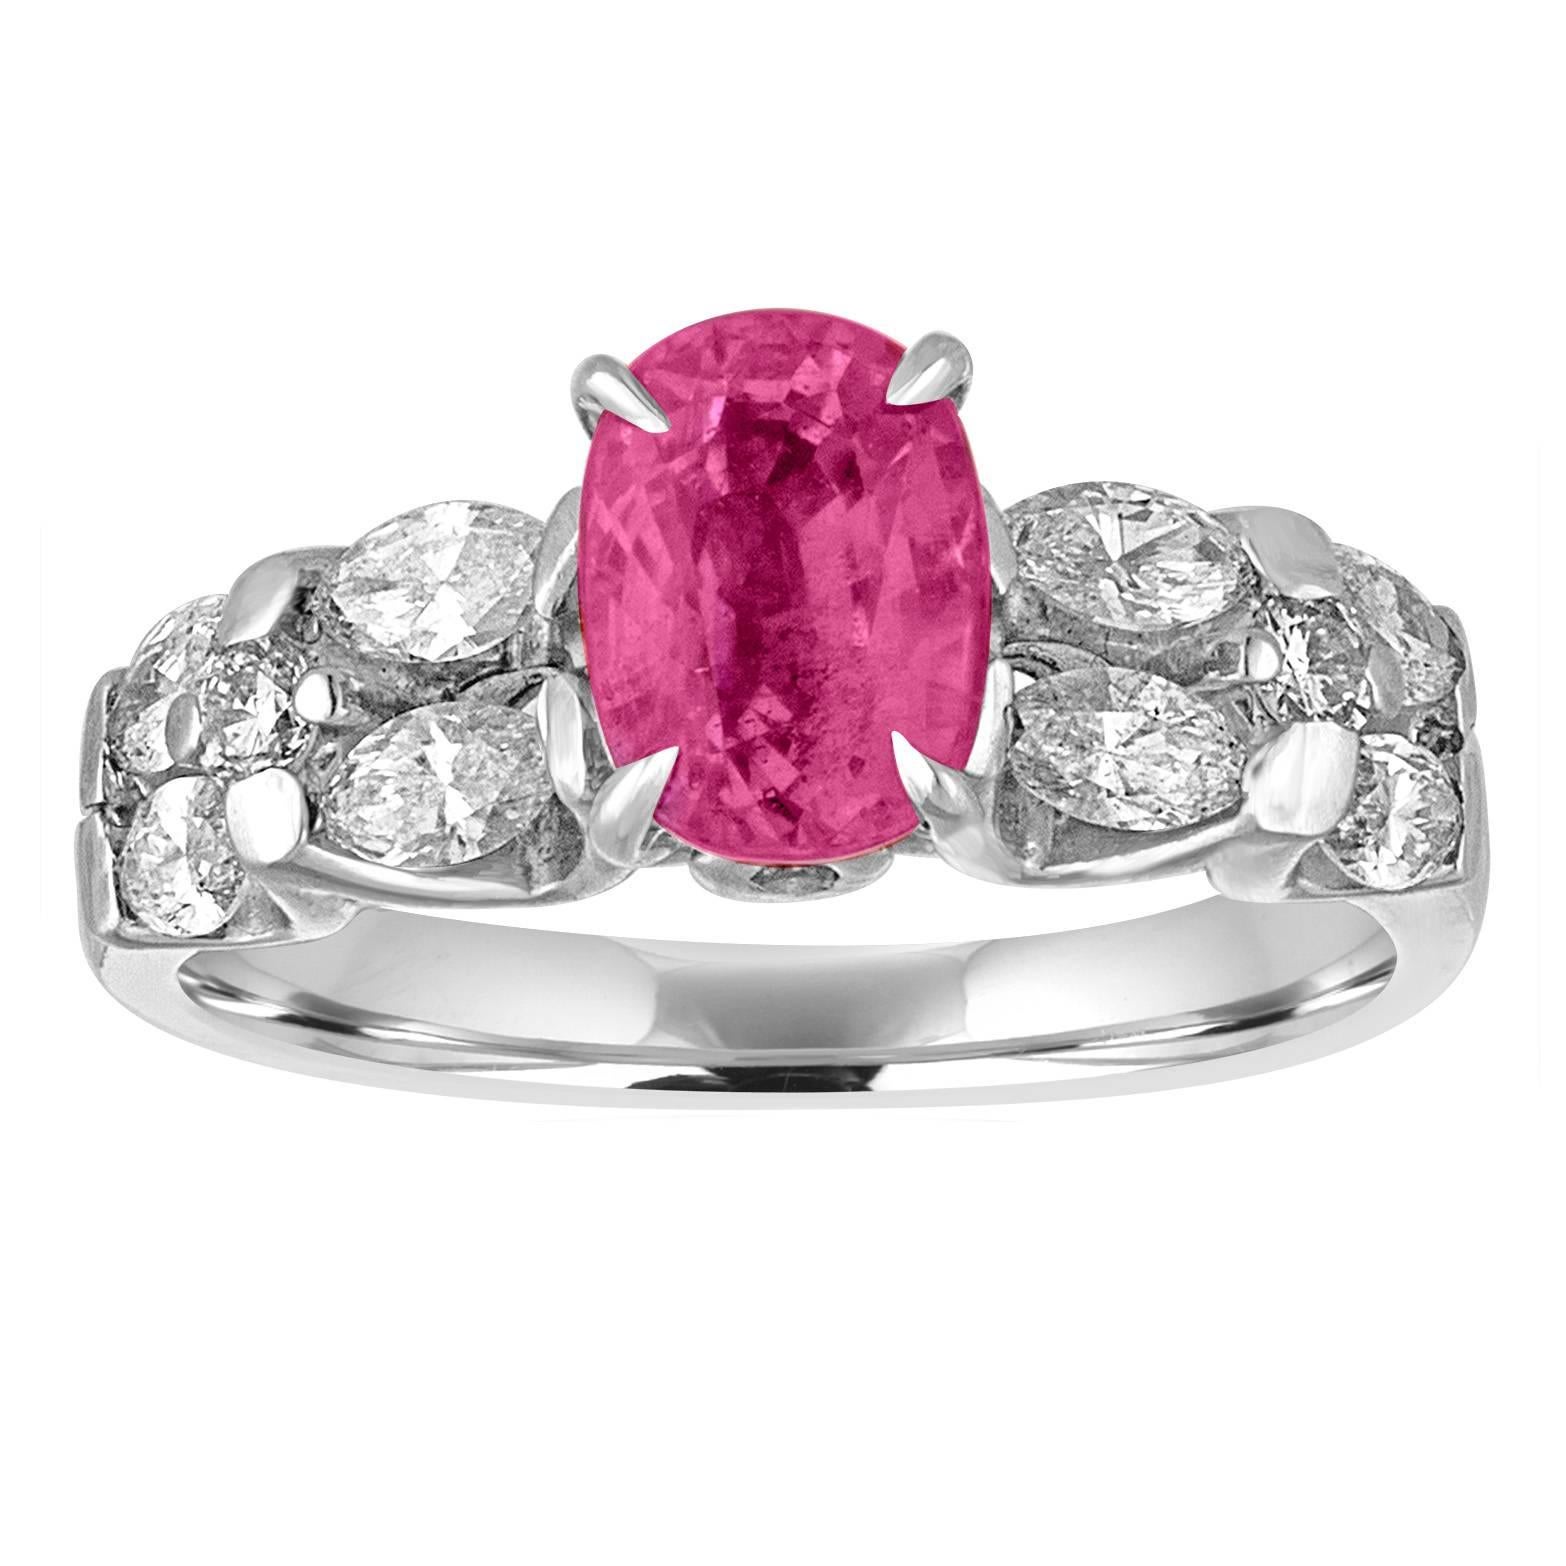 Certified 2.09 Carat Oval Pink Sapphire Diamond Platinum Ring